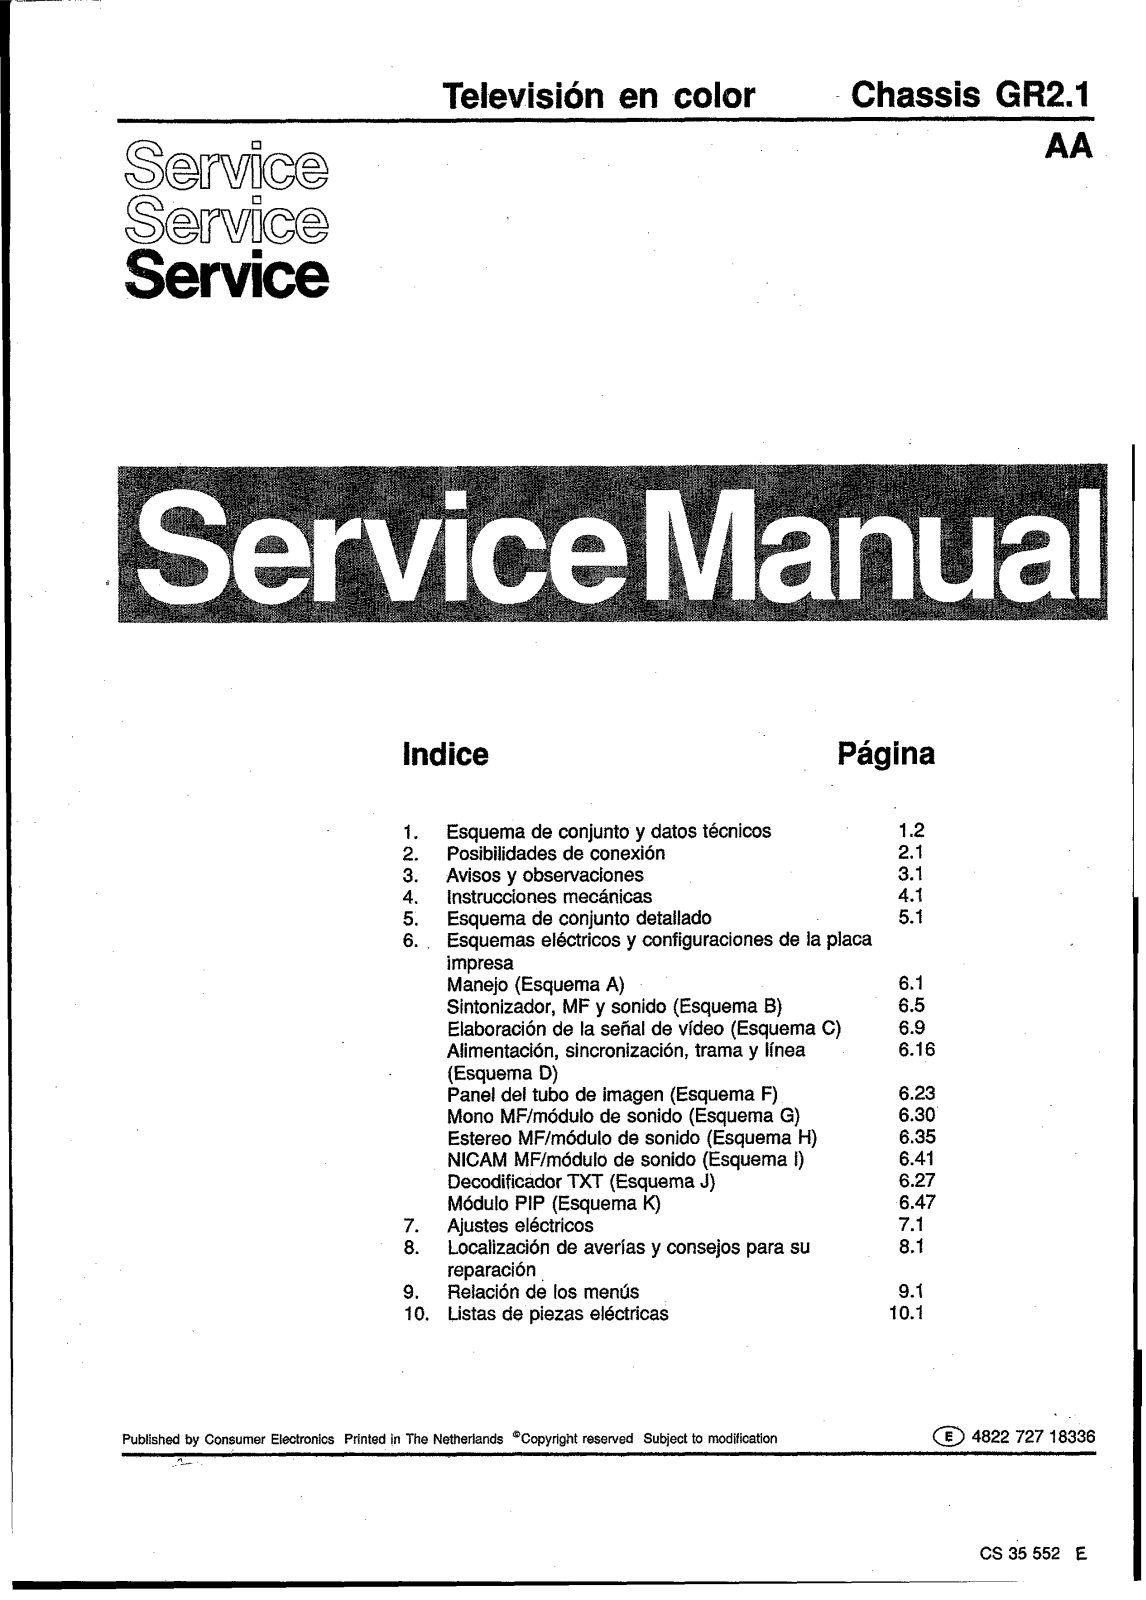 PHILIPS GR2.1AA Service Manual